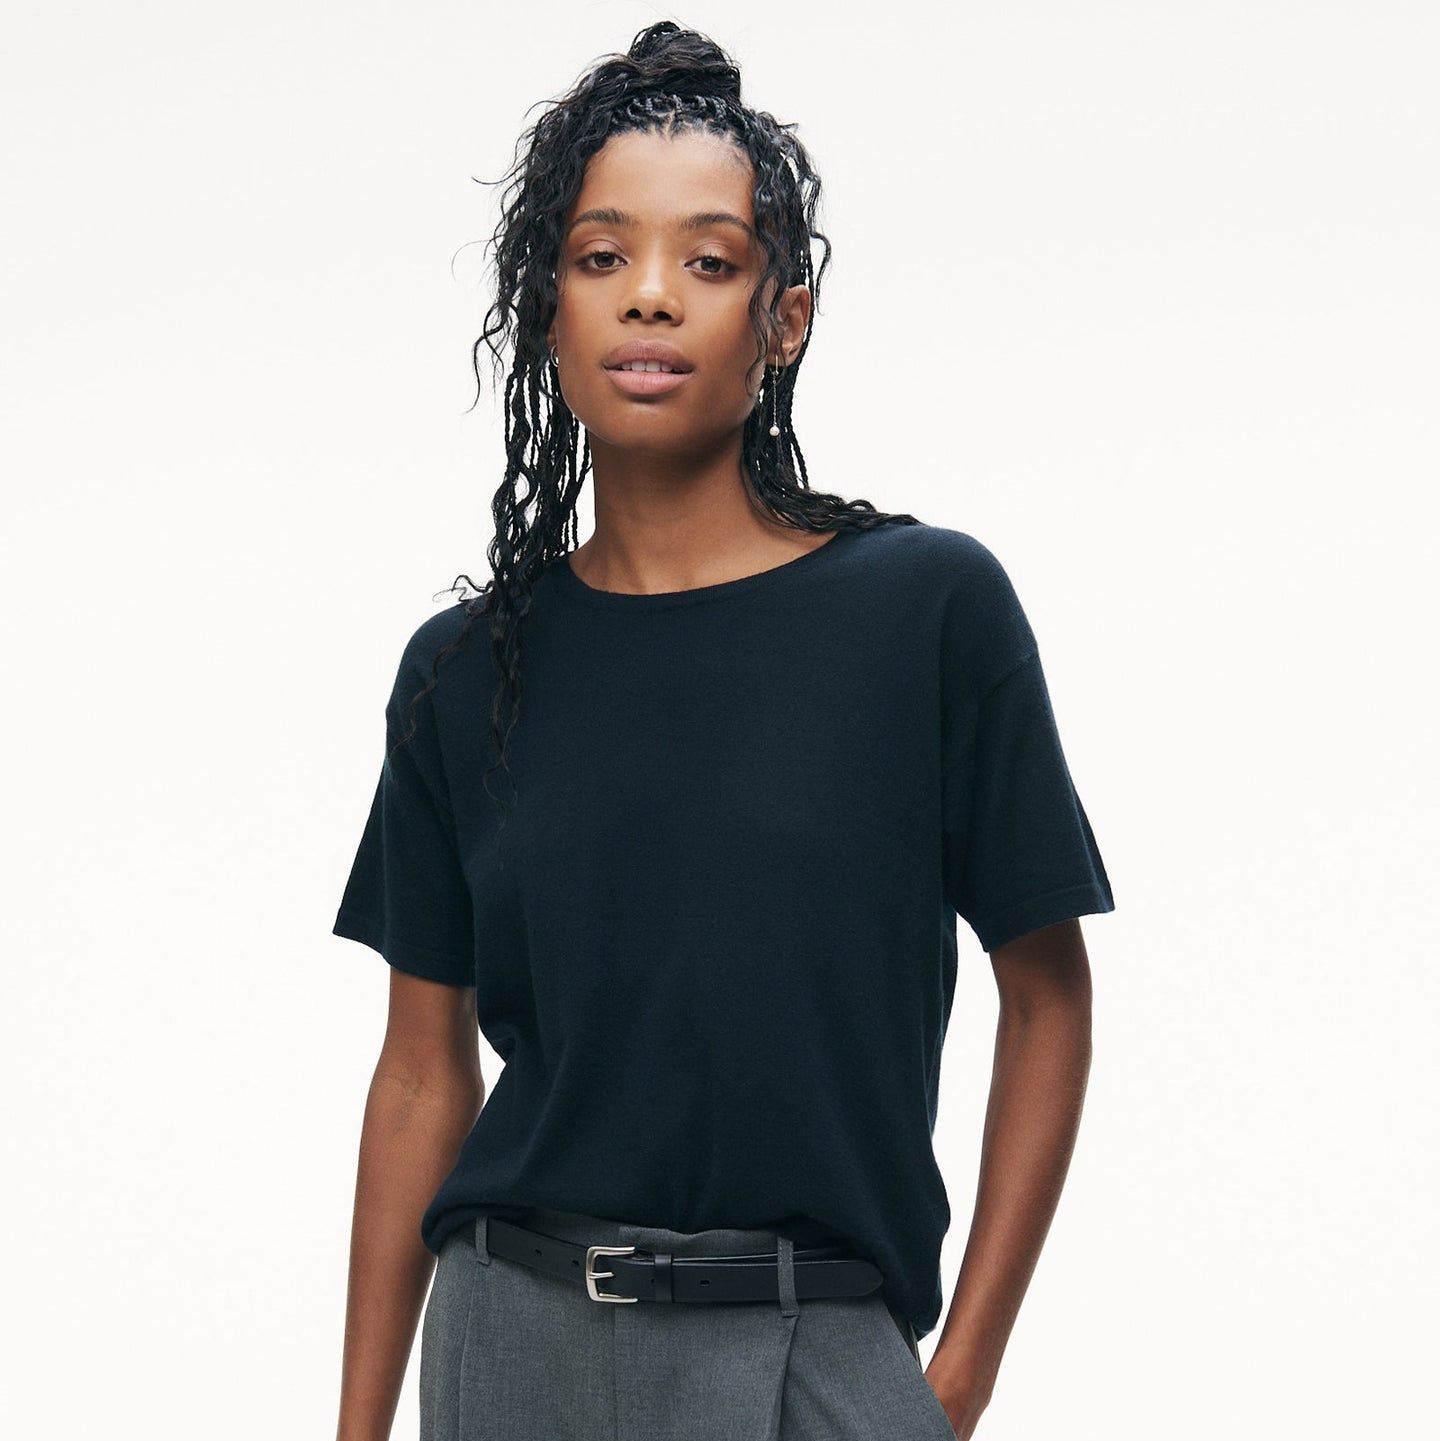 black tee shirt model